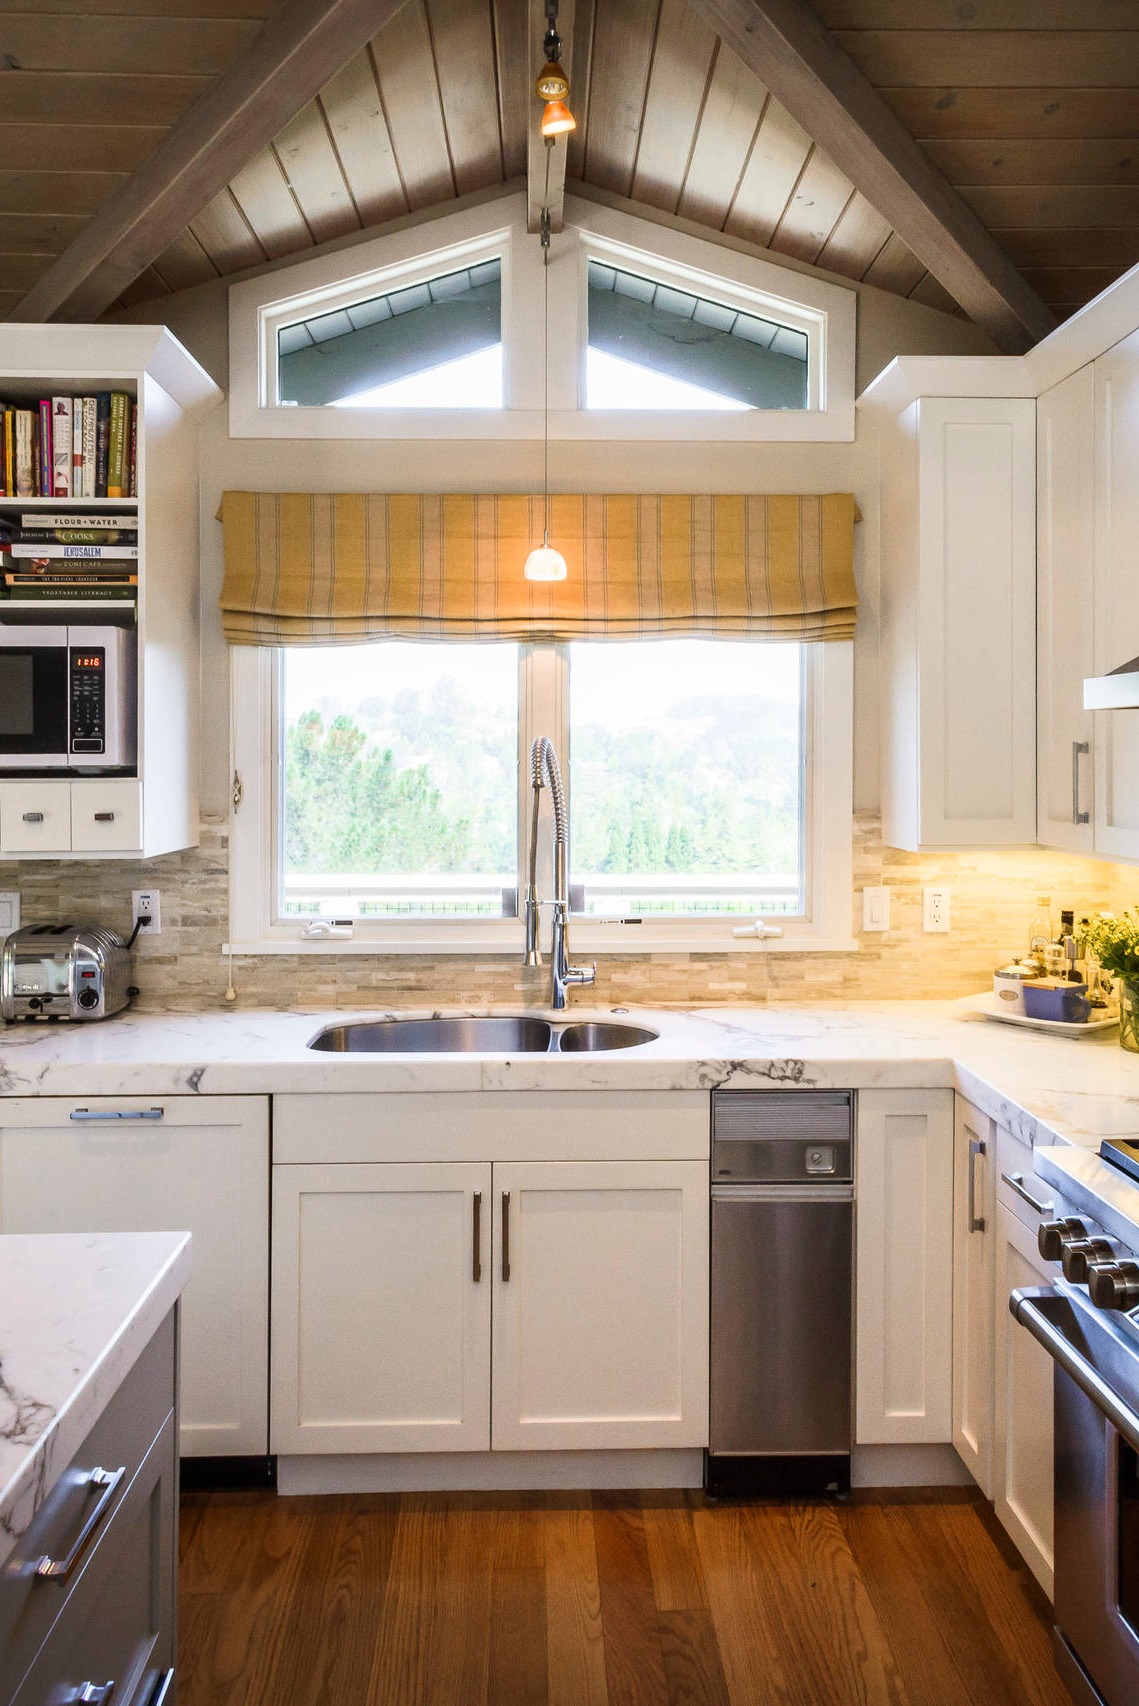 Country Style Kitchen White Marble Countertops Cabinets Stone Backsplash hardwood Floor